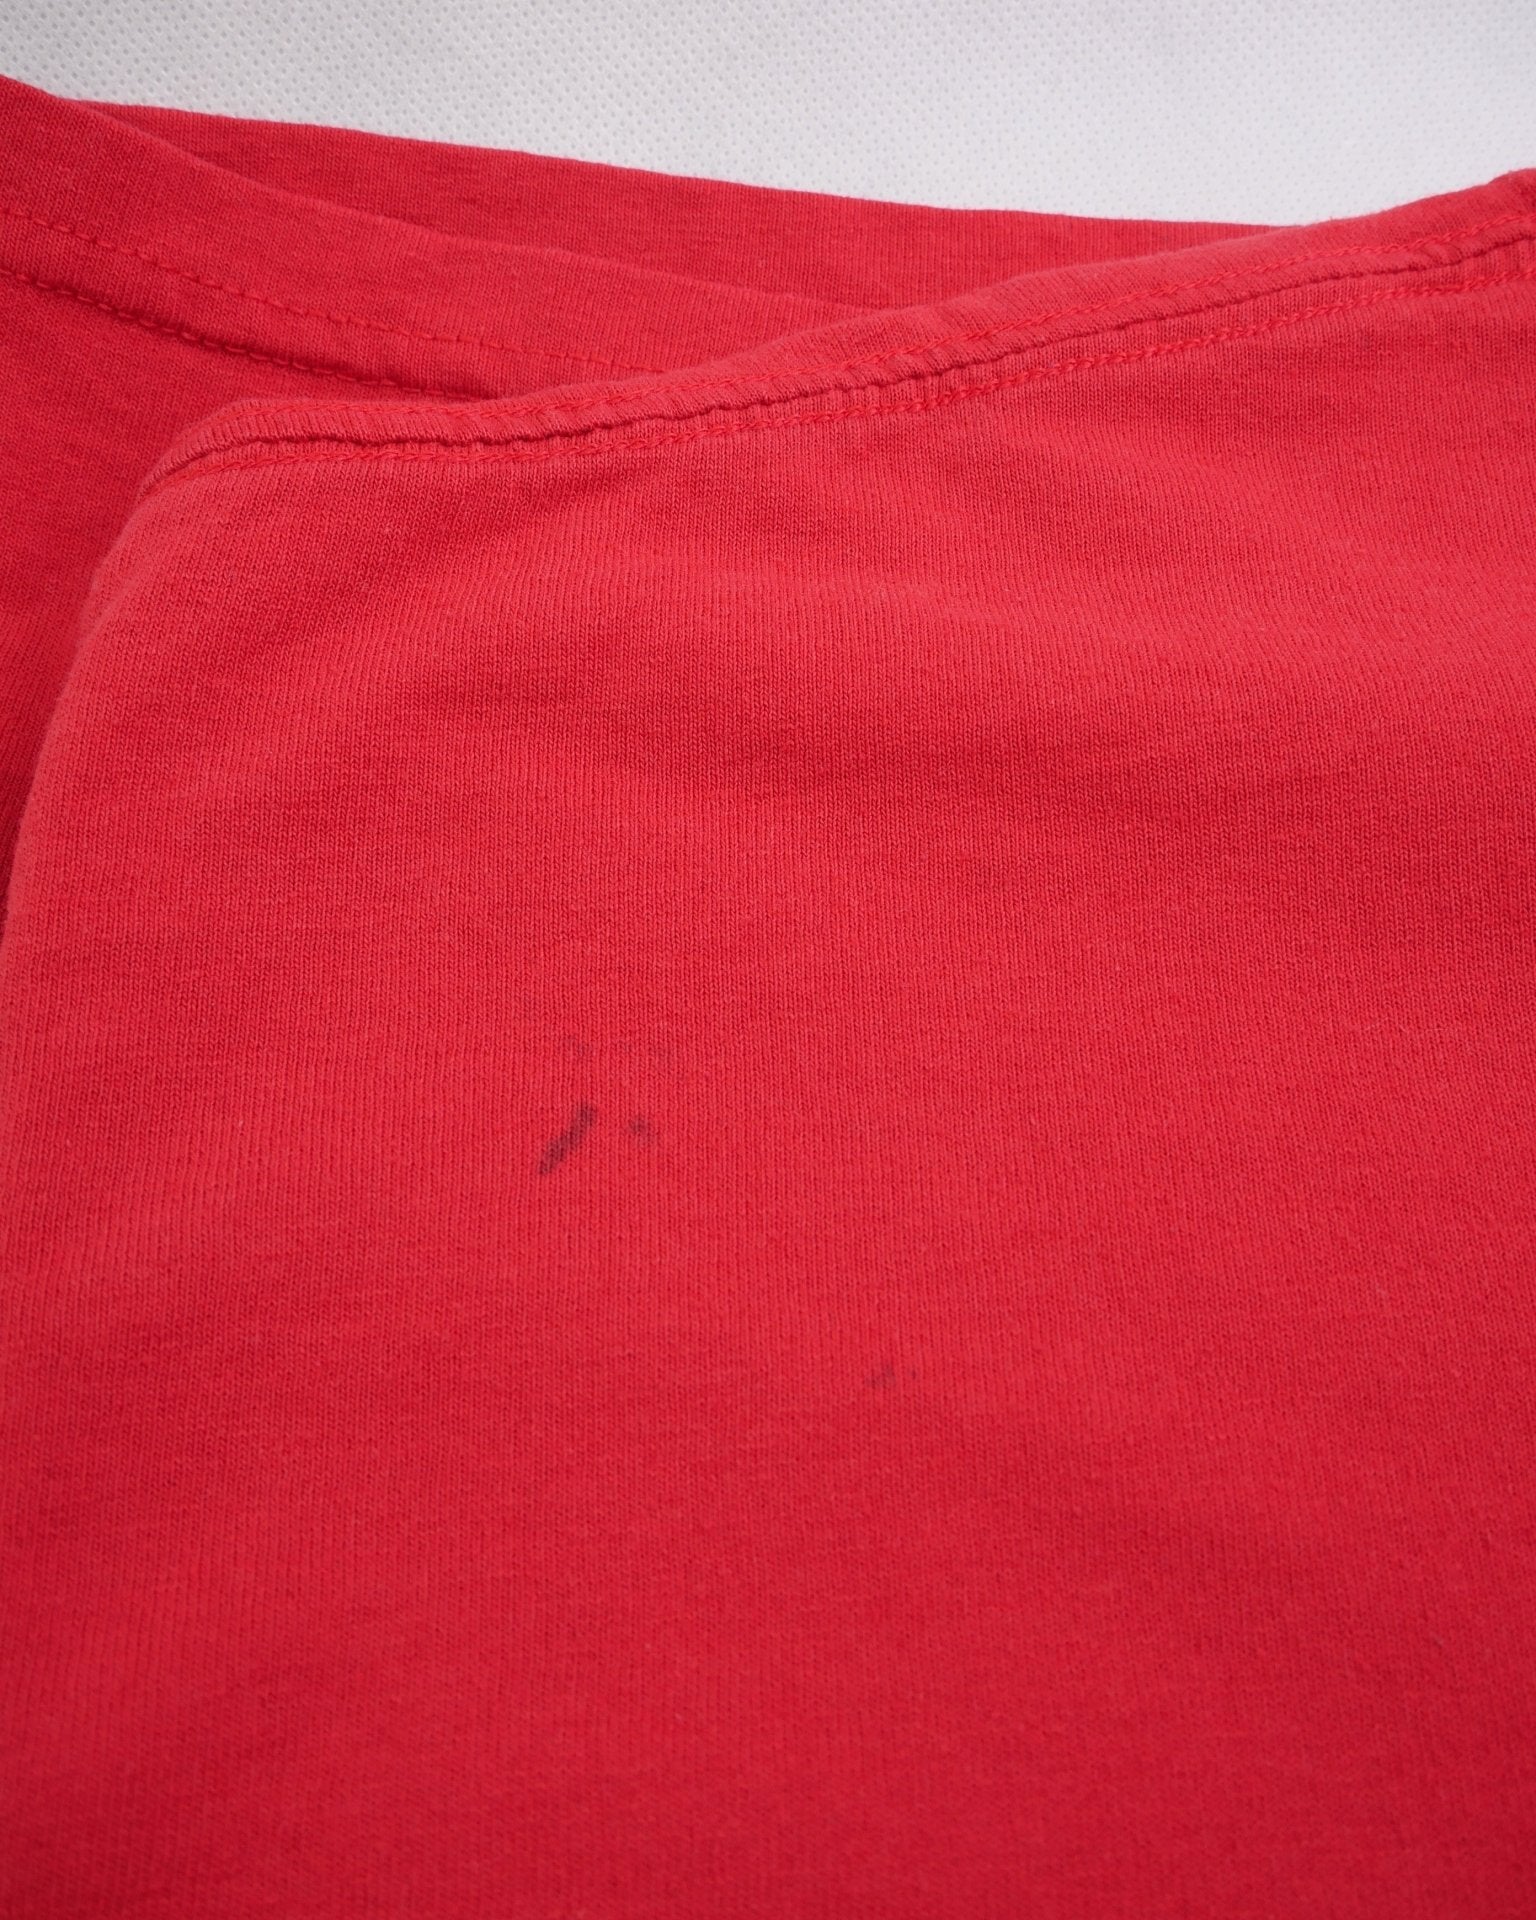 Coronado Mustangs 2011 printed graphic red Sweater - Peeces